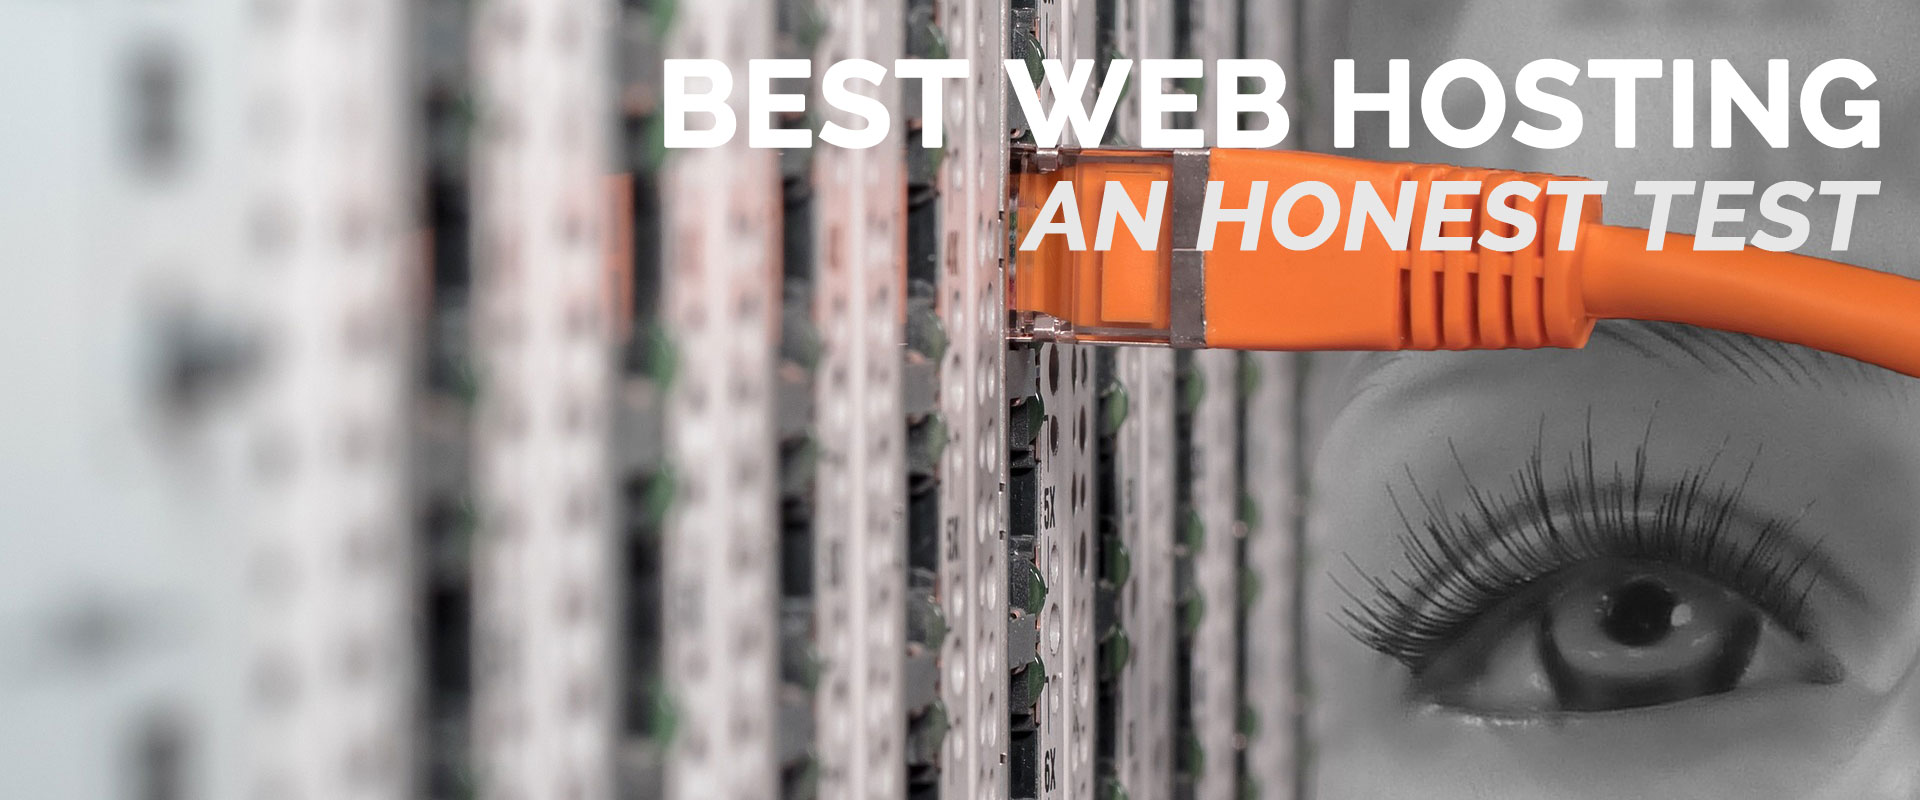 Best web hosting - an honest test